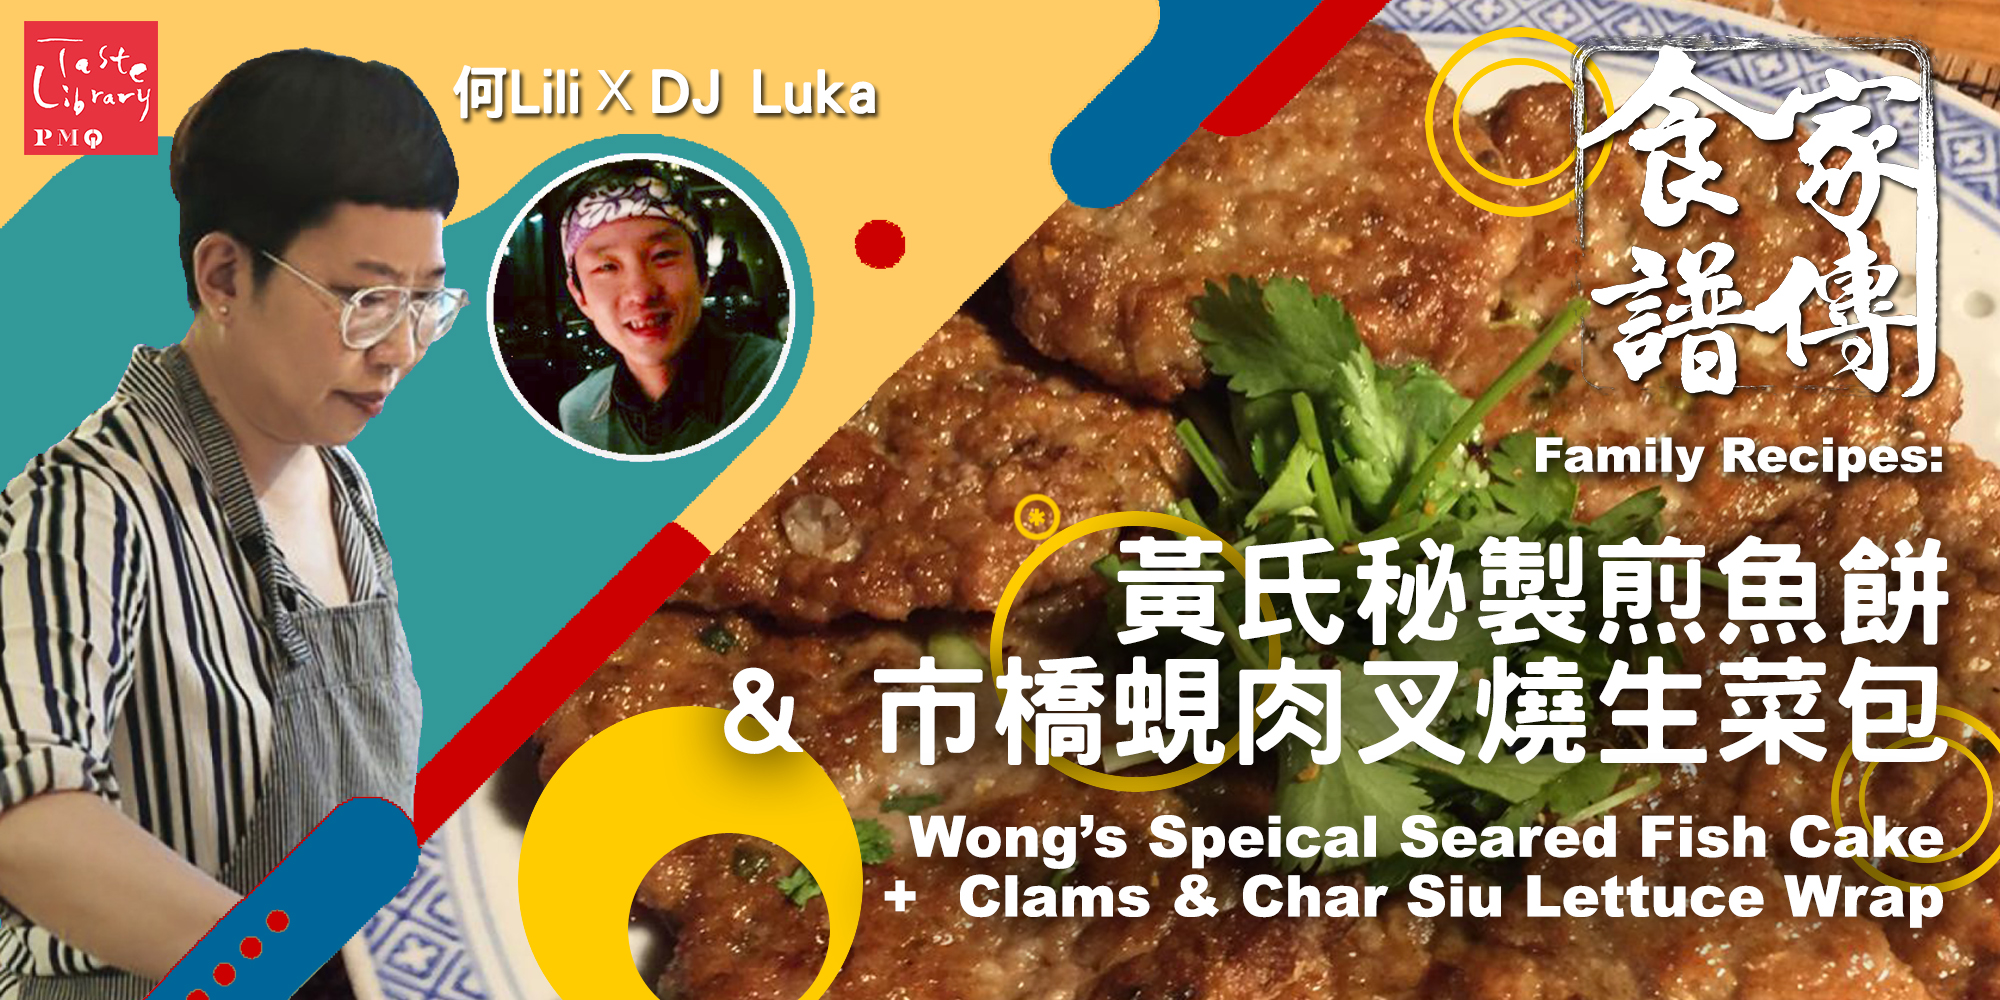 家傳食譜: 黃氏秘製煎魚餅 + 市橋蜆肉叉燒生菜包 Family Recipes Workshop: Wong’s Special Seared Fish Cake + Clams &amp; Char Siu Lettuce Wrap (嘉賓: DJ Luka）